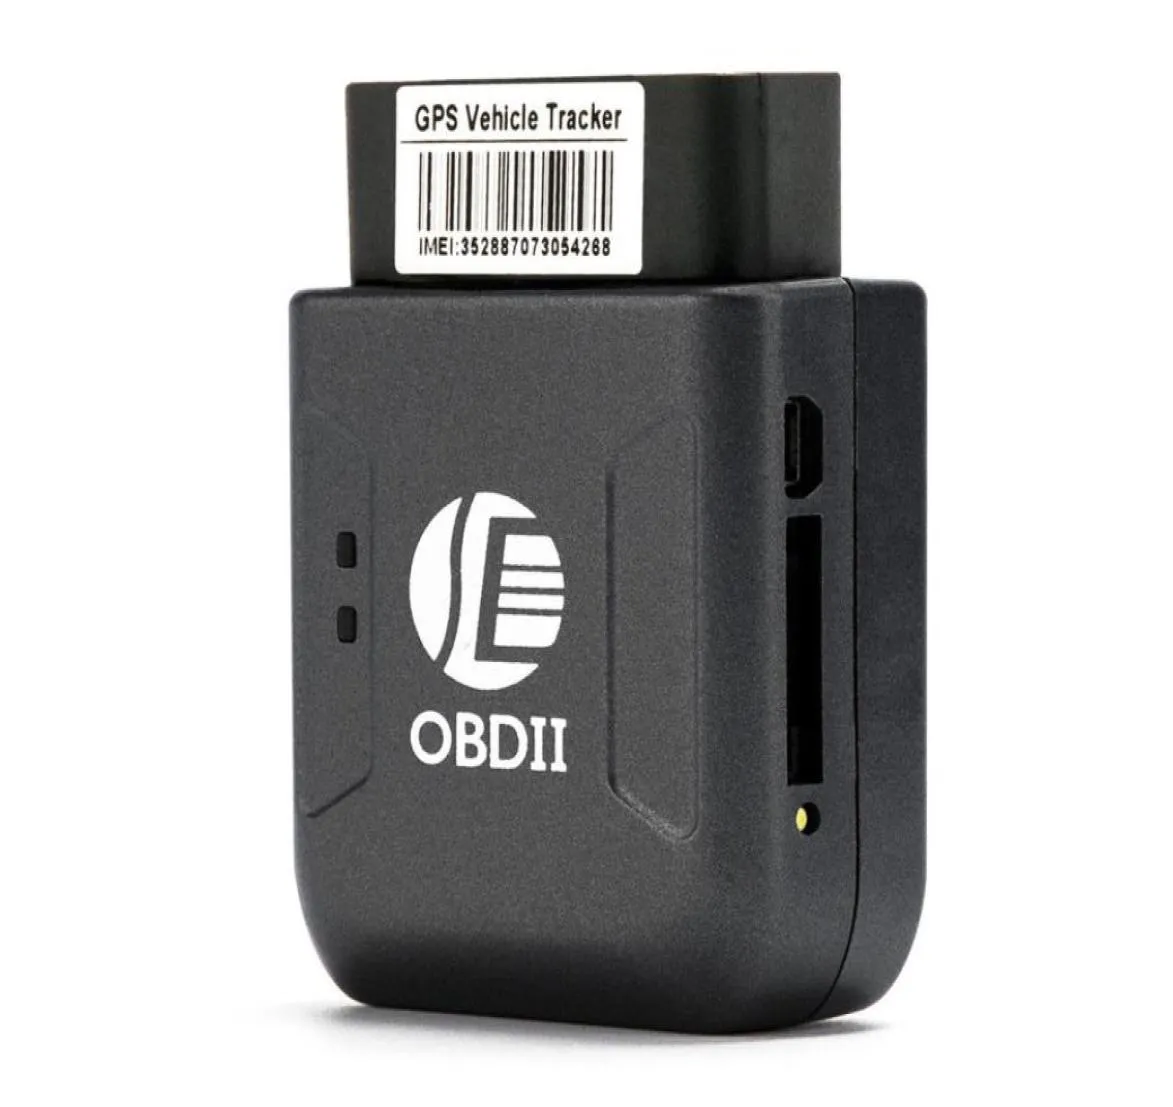 NY OBD2 GPS Tracker TK206 OBD 2 Real Time GSM Quad Band Antitheft Vibration Alarm GSM GPRS Mini GPRS Tracking OBD II CAR GPS4260243